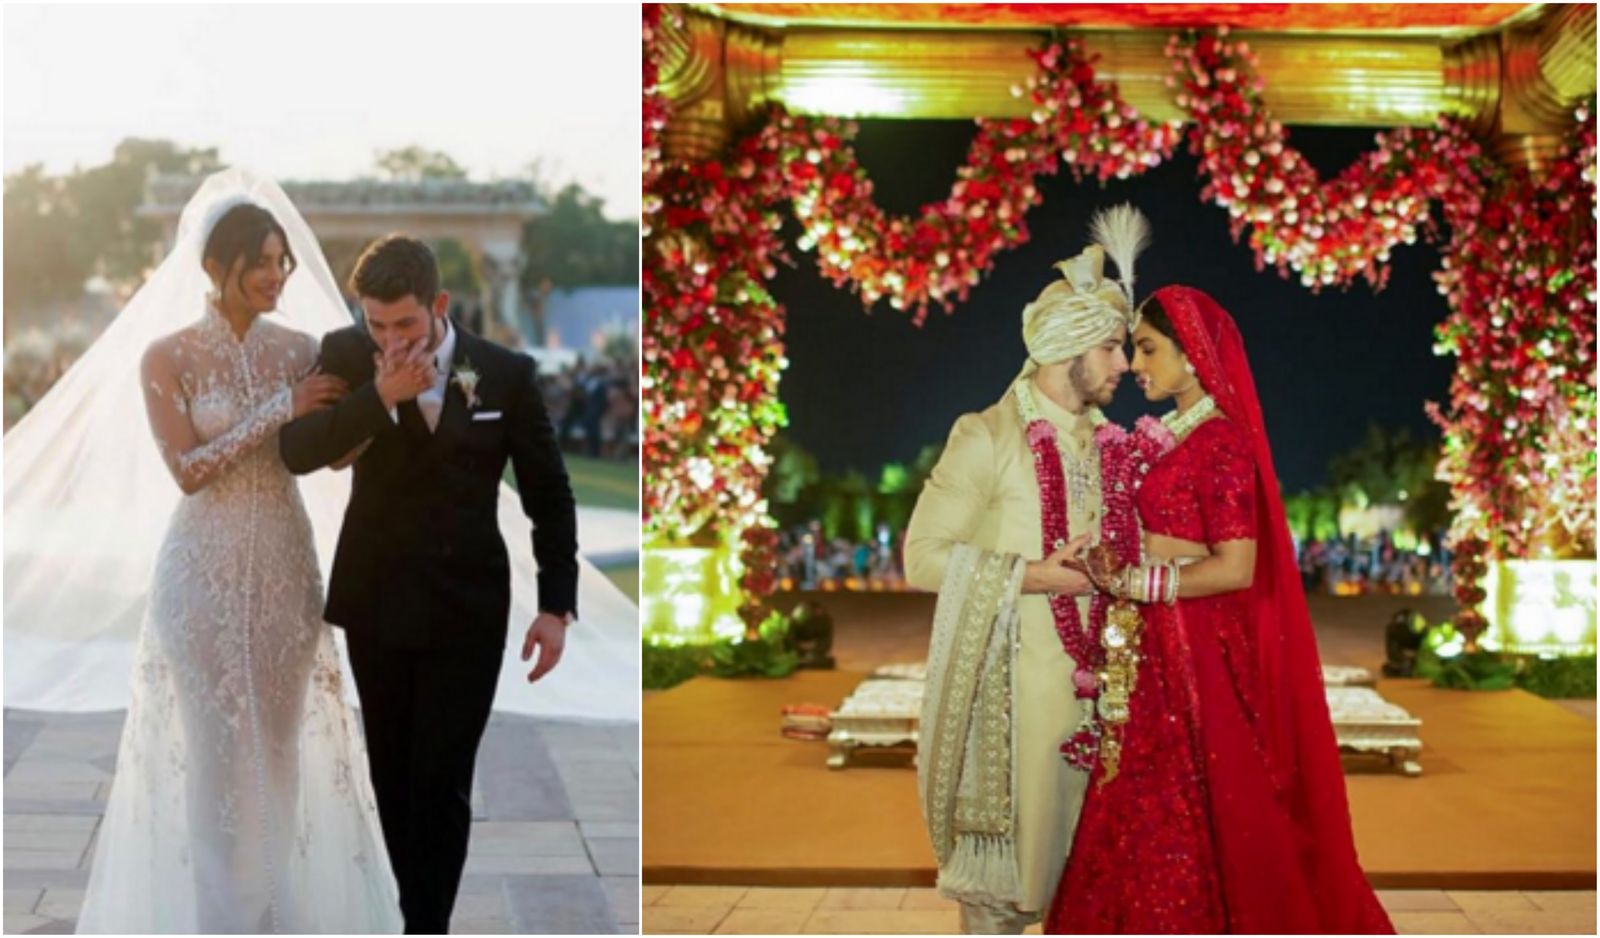 Here’s How Nick Jonas And Priyanka Chopra Will Spend Their First Wedding Anniversary